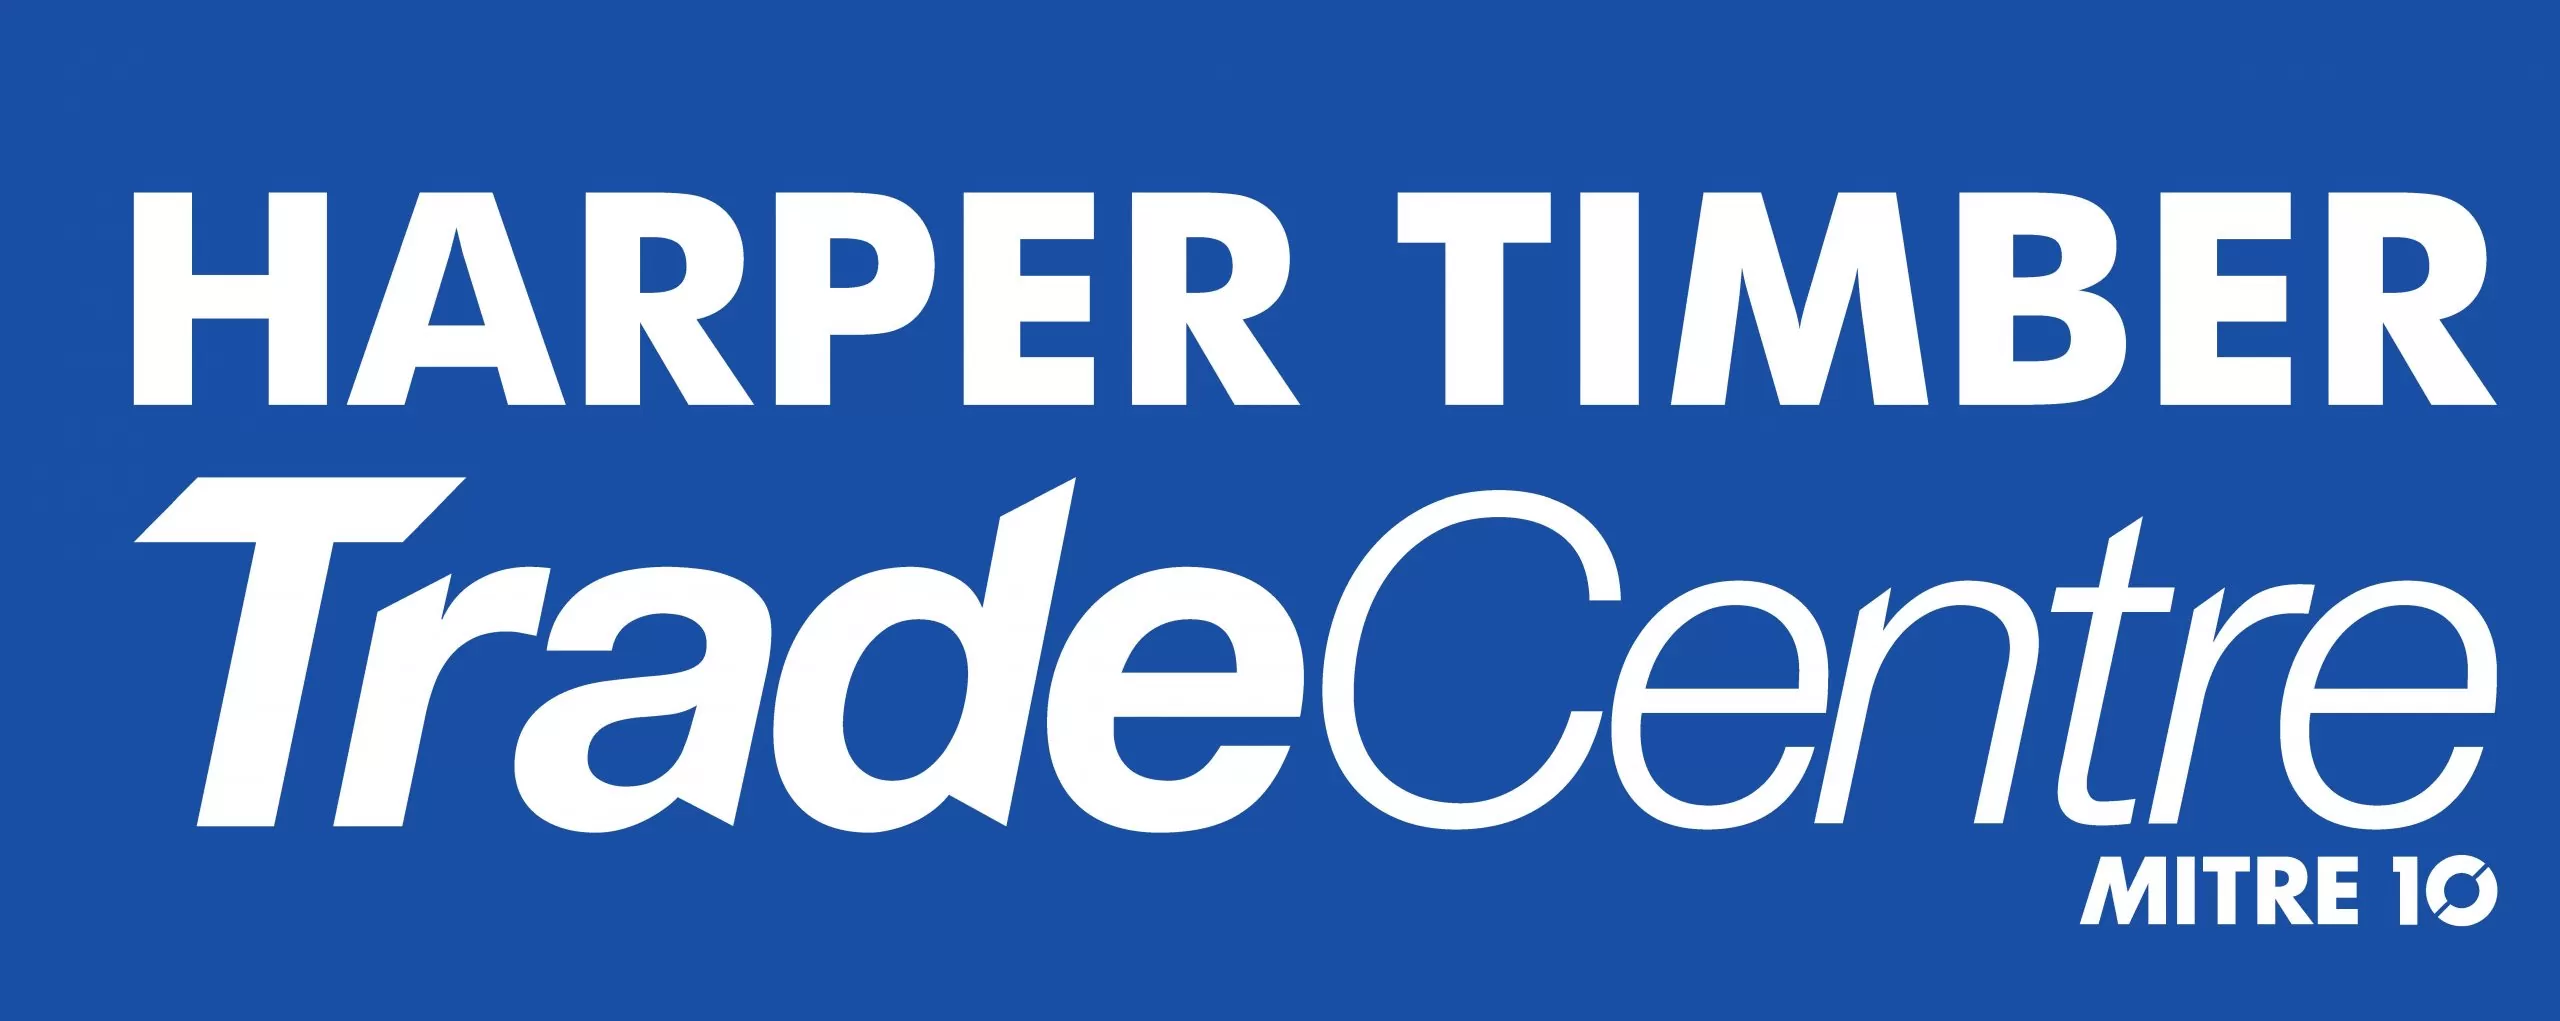 Harper Timber logo